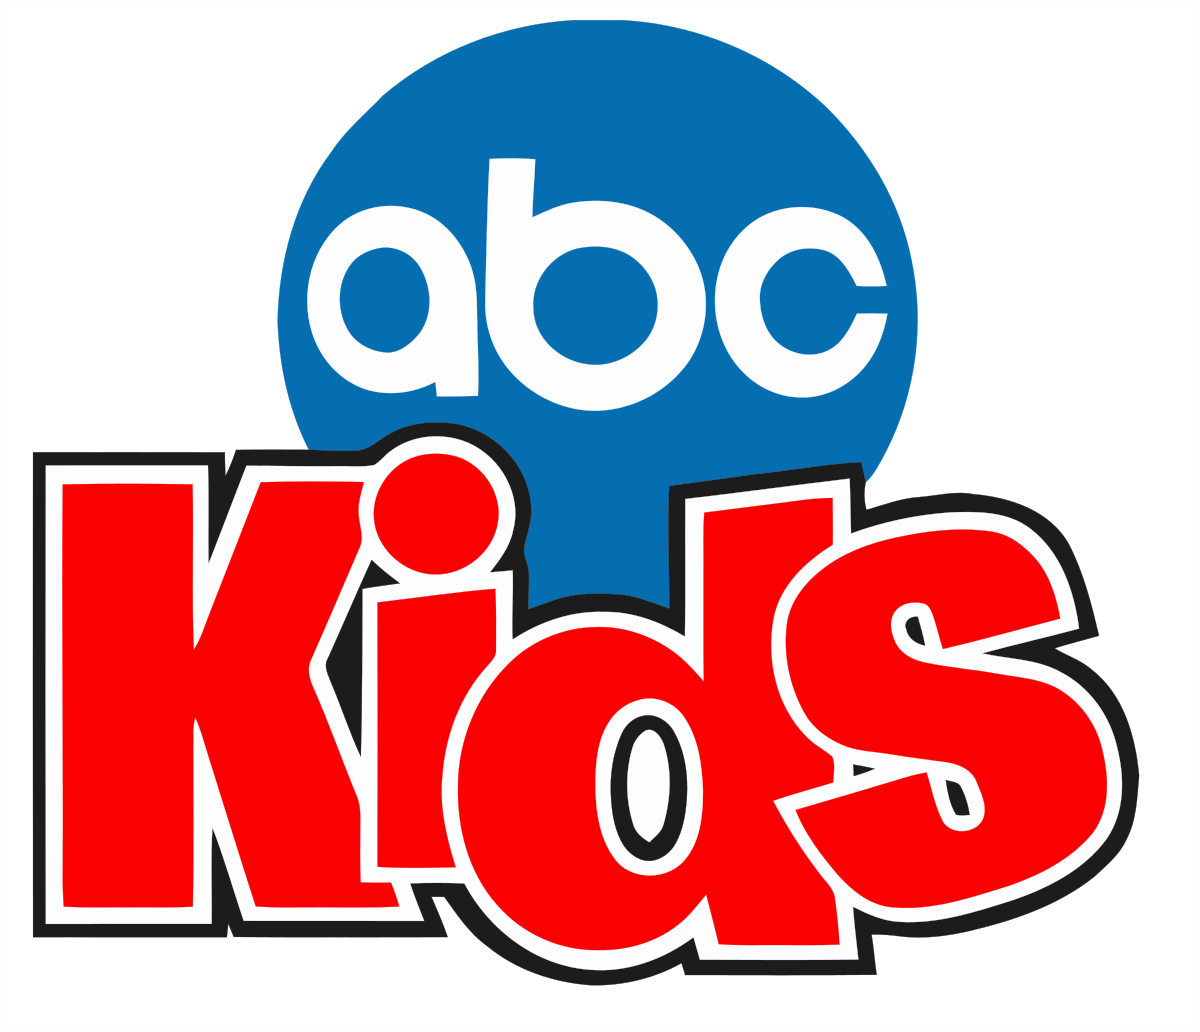 CW4Kids Toonzai Logo - ABC Kids (TV programming block)